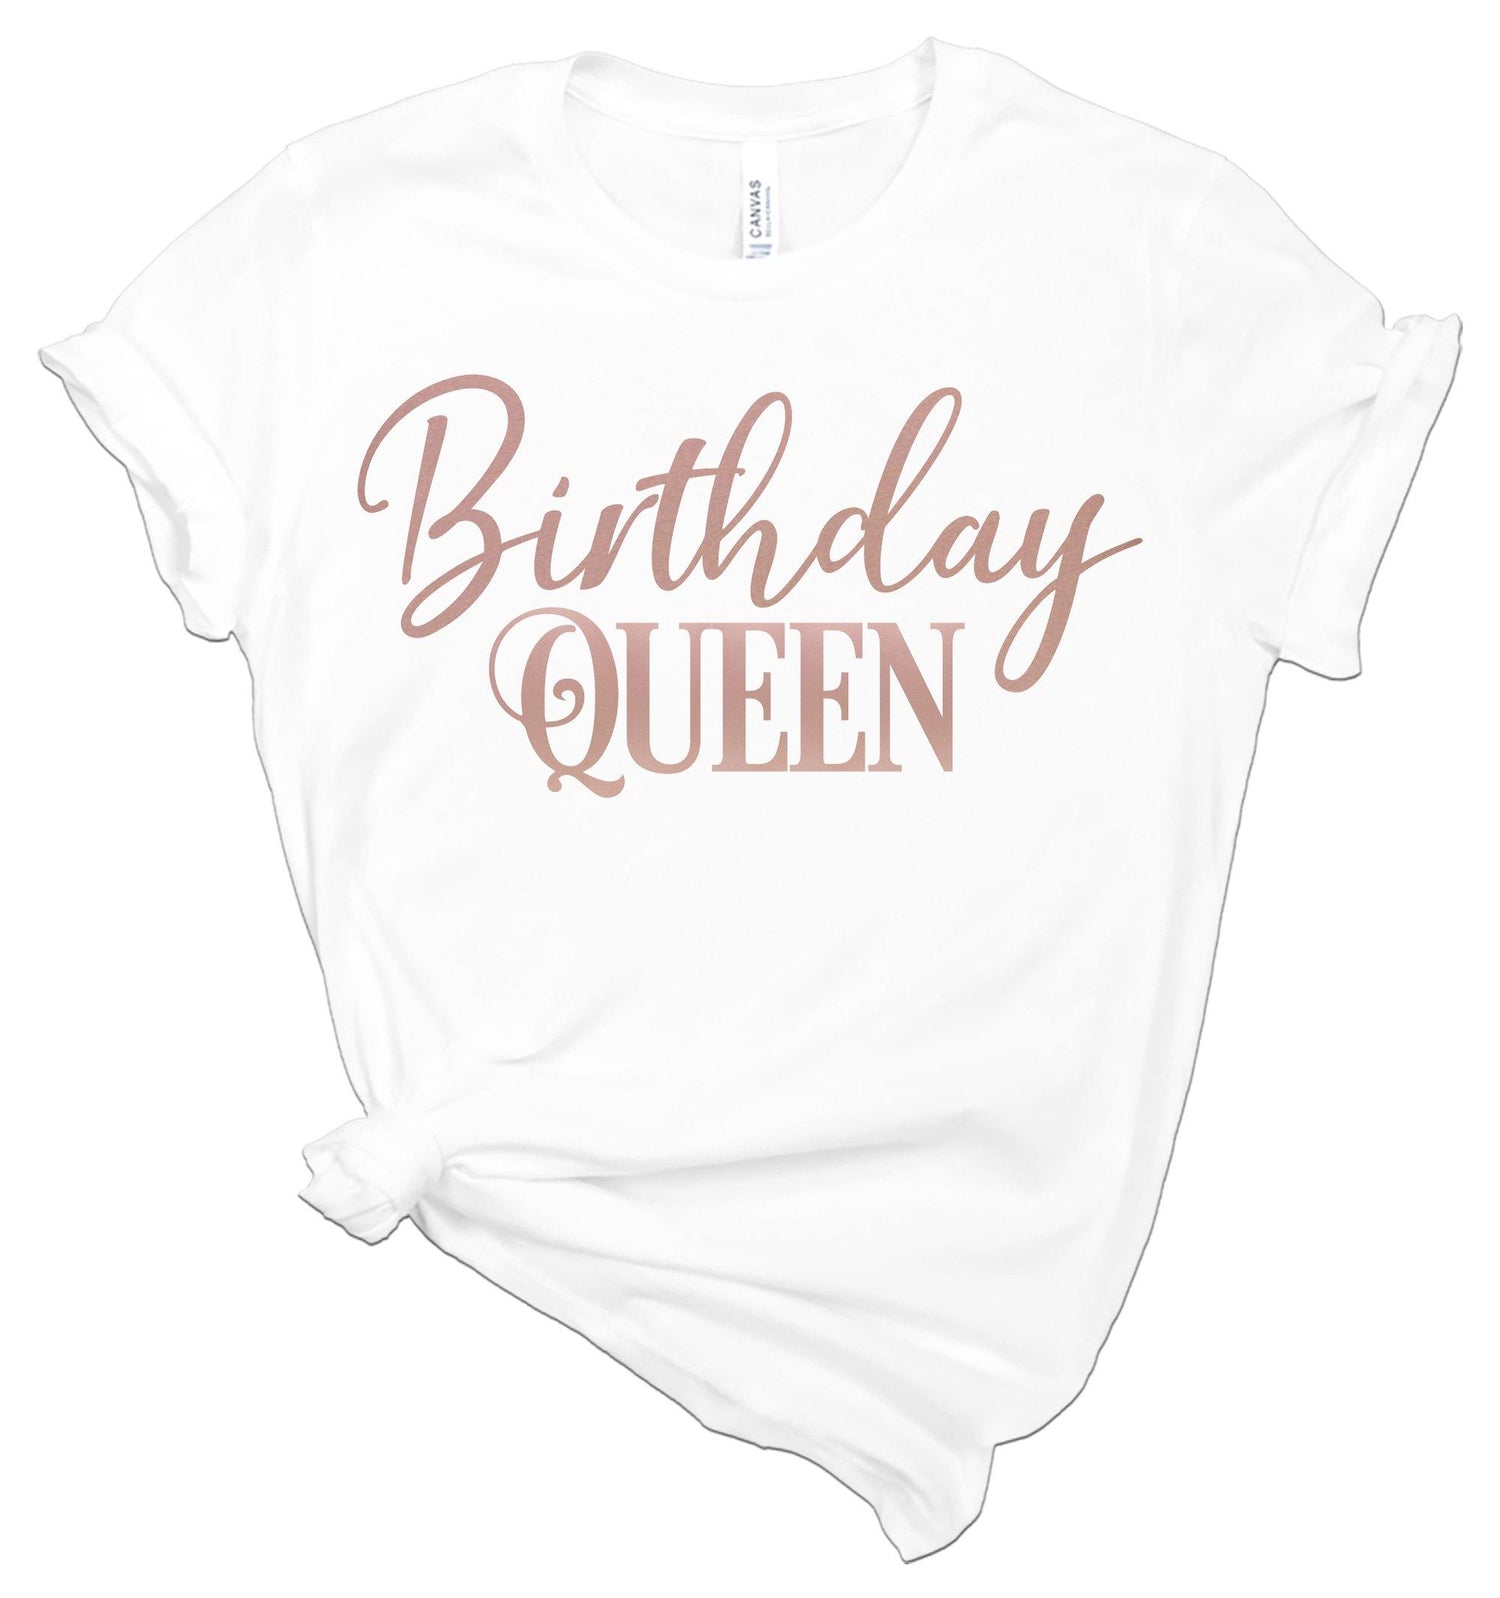 Birthday Queen / Birthday Squad - Women's Birthday Shirts - Healthy Wealthy Skinny